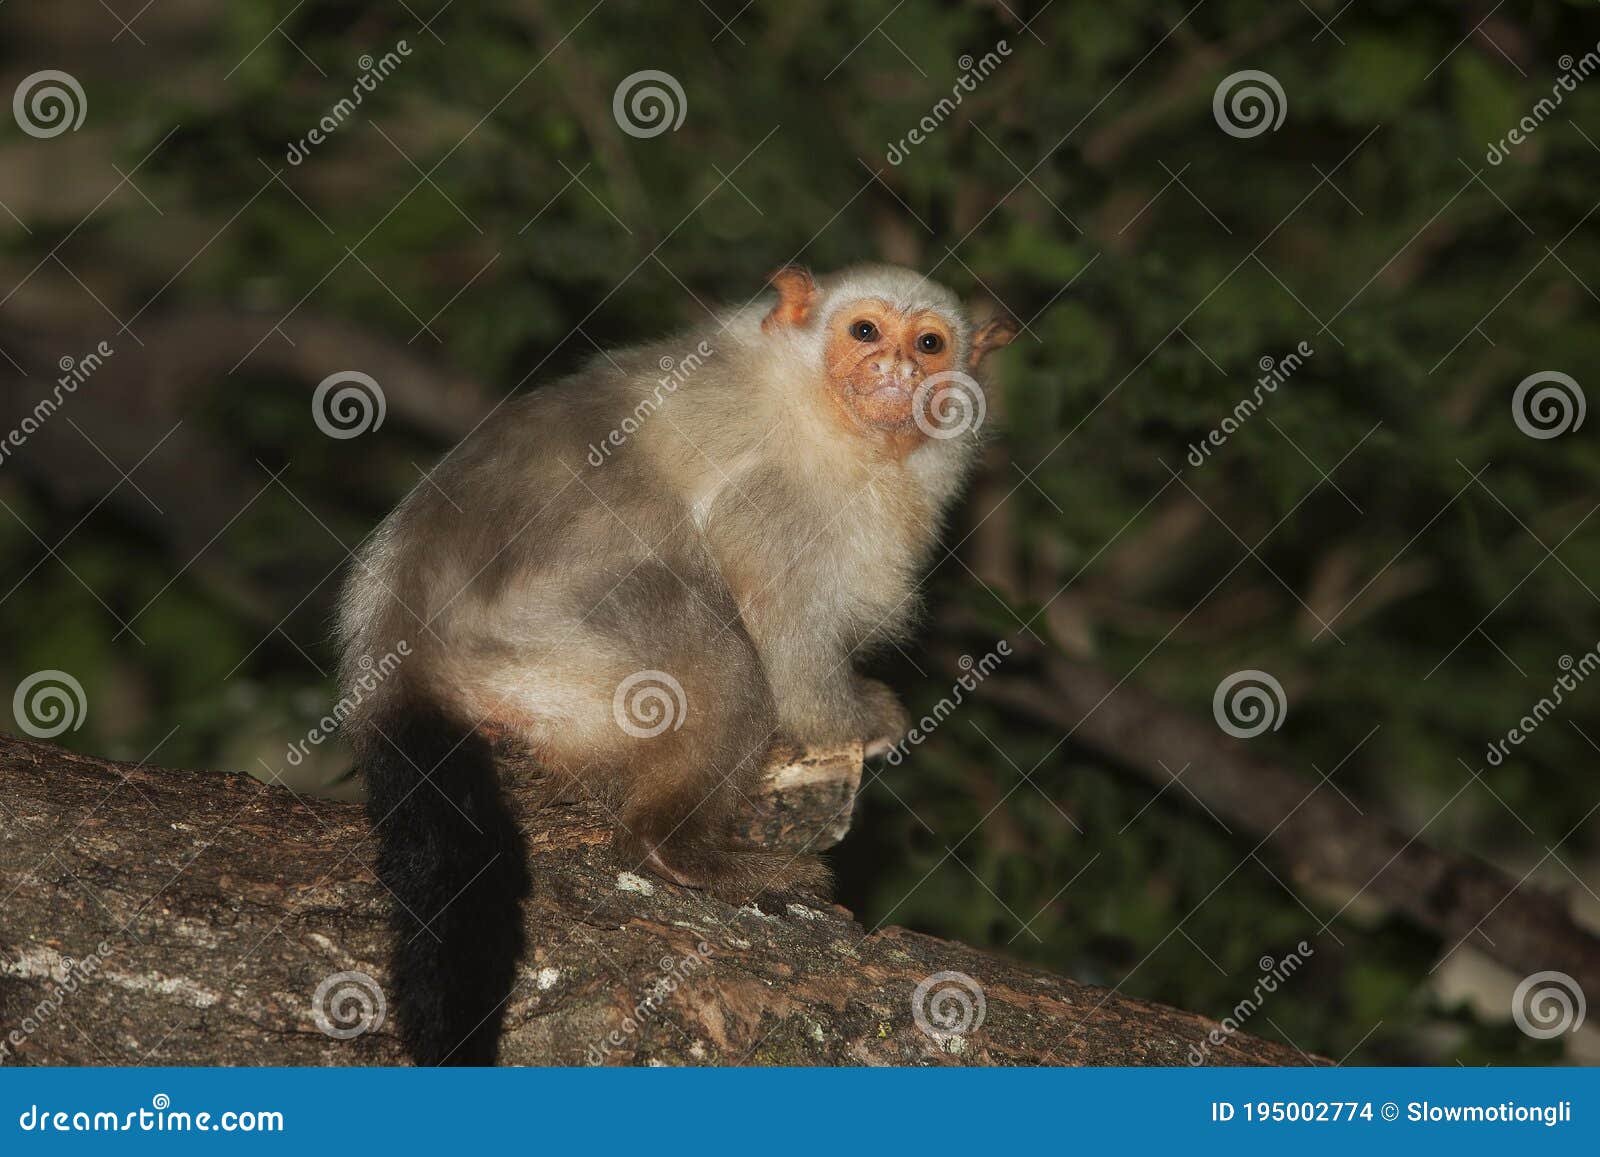 silvery marmoset mico argentatus, female standing on branch